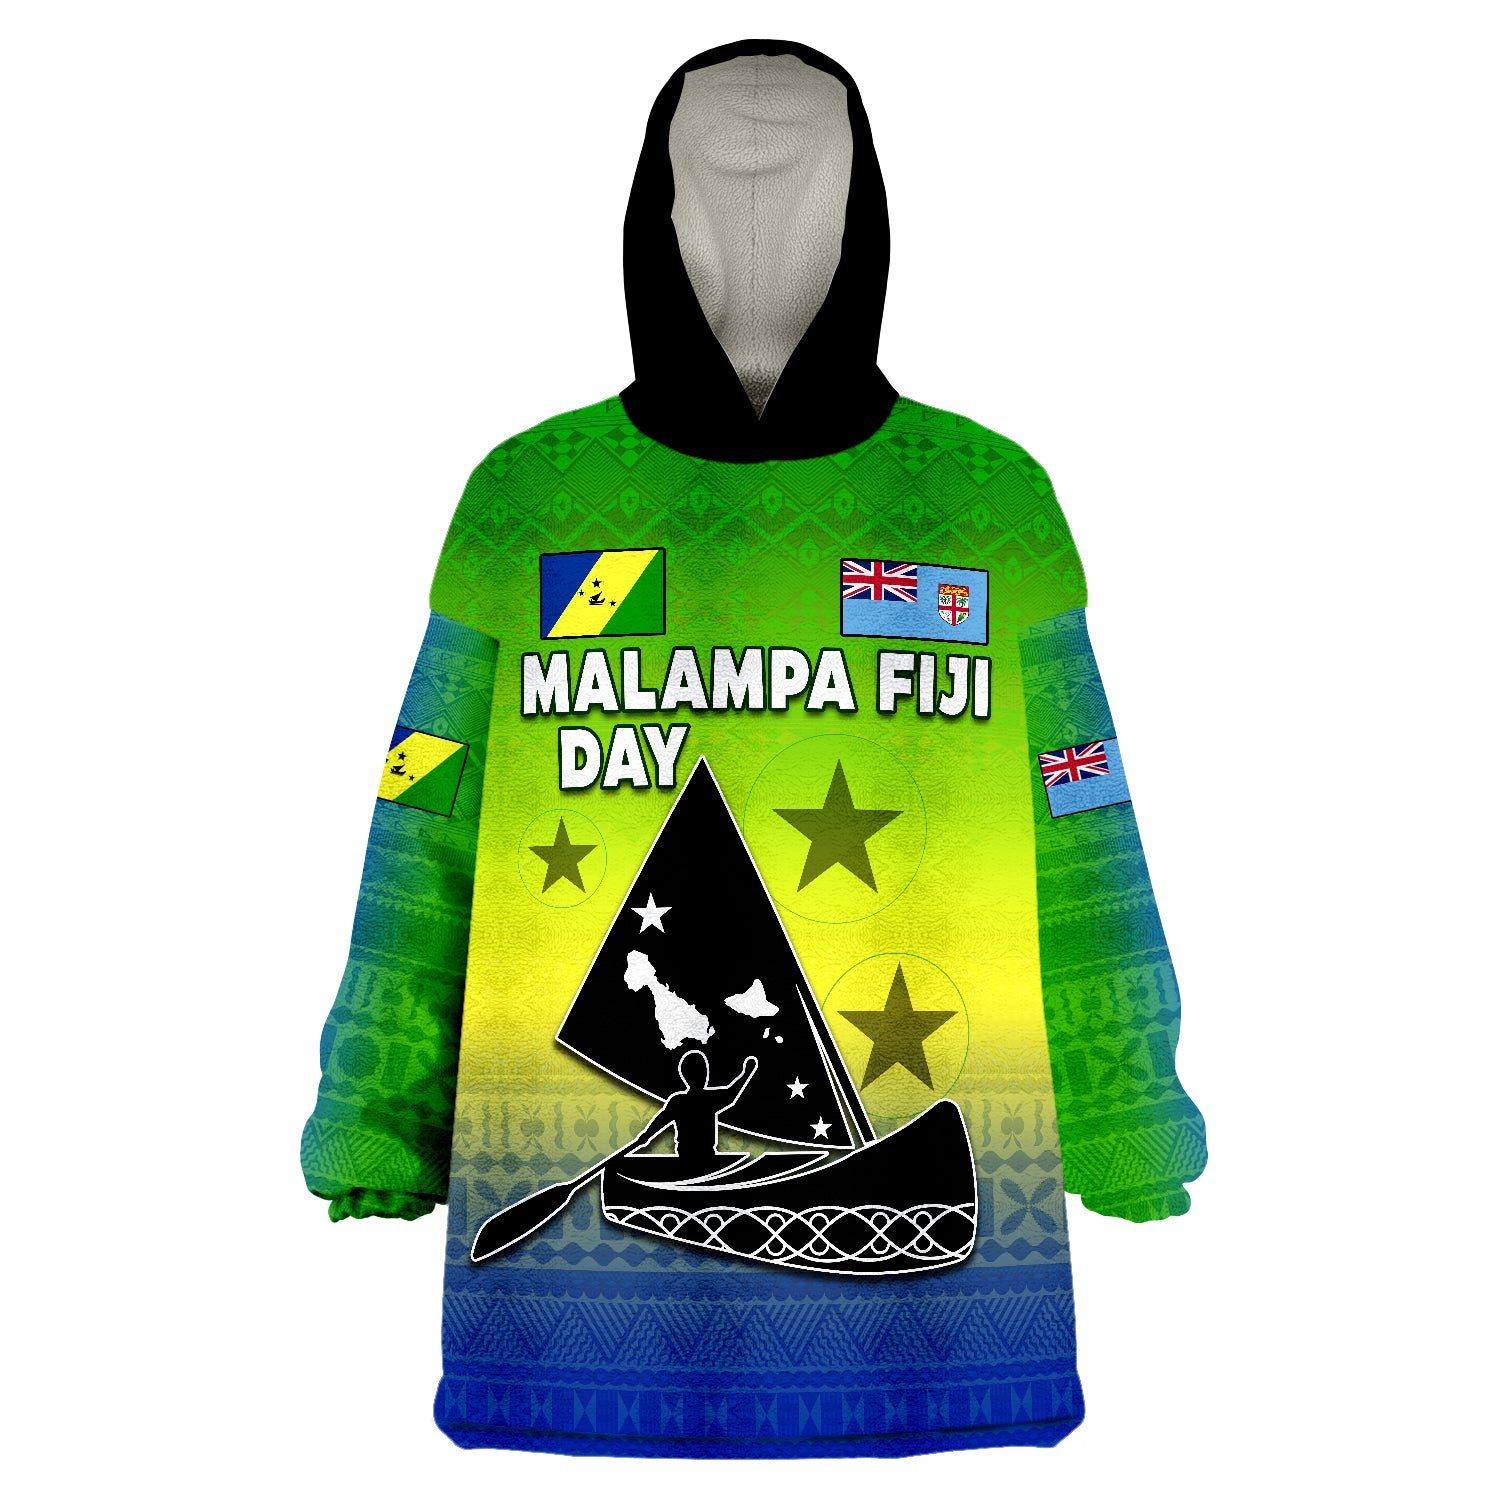 malampa-fiji-day-happy-52nd-anniversary-wearable-blanket-hoodie